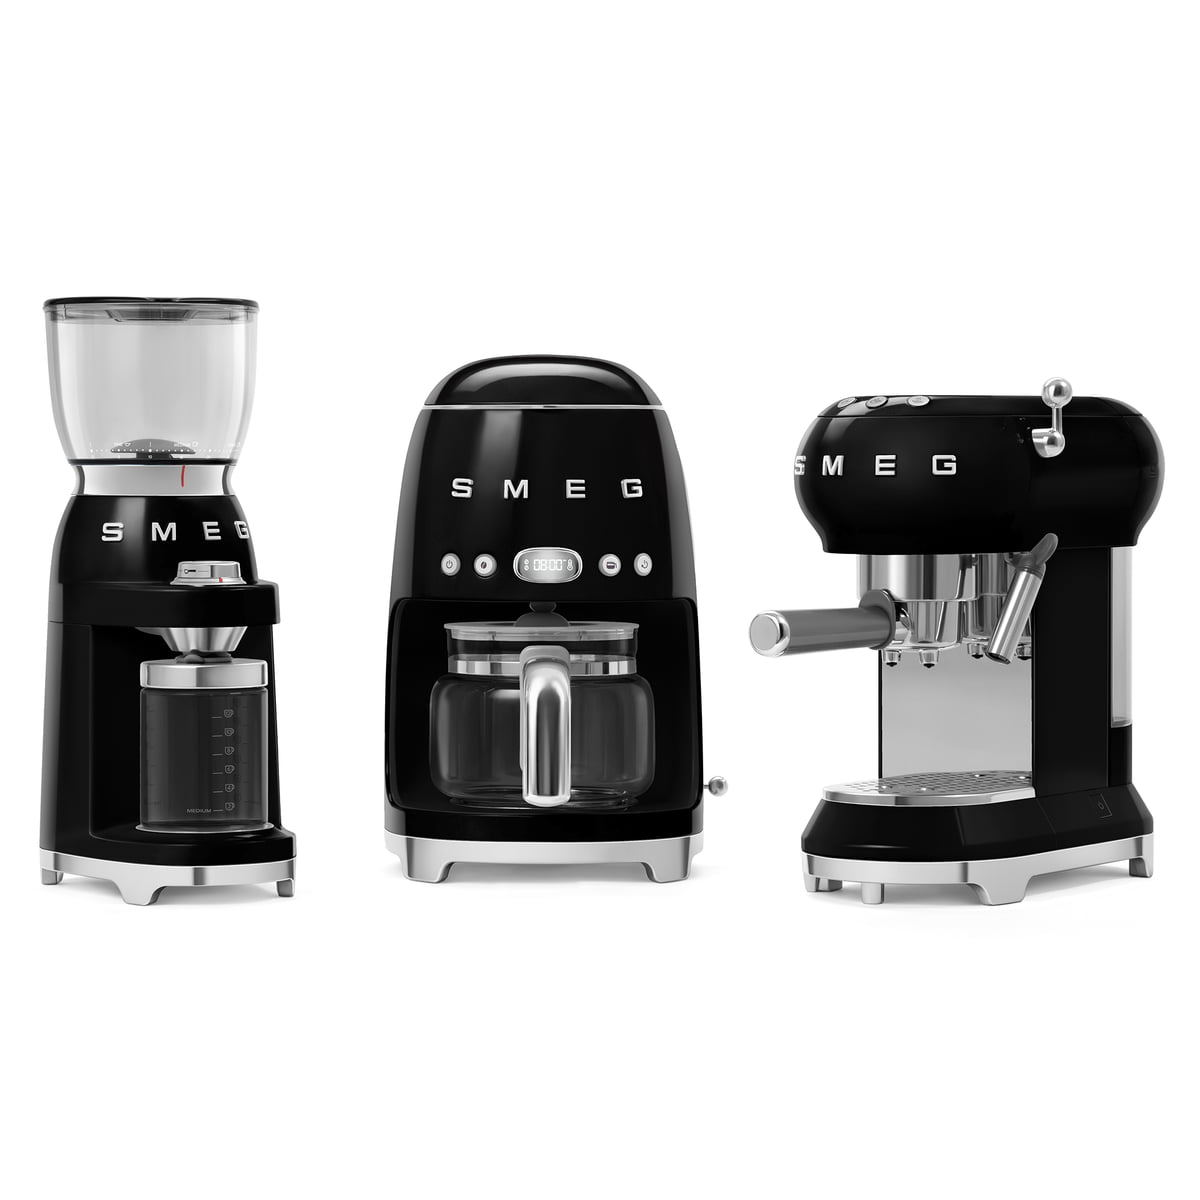 https://cdn.connox.com/m/100030/572494/media/Smeg/Juni-2022/Smeg-50_s-Style-Kaffeemuehle-Kaffeemaschine-Espressomaschine-schwarz-Trio-frei-.jpg